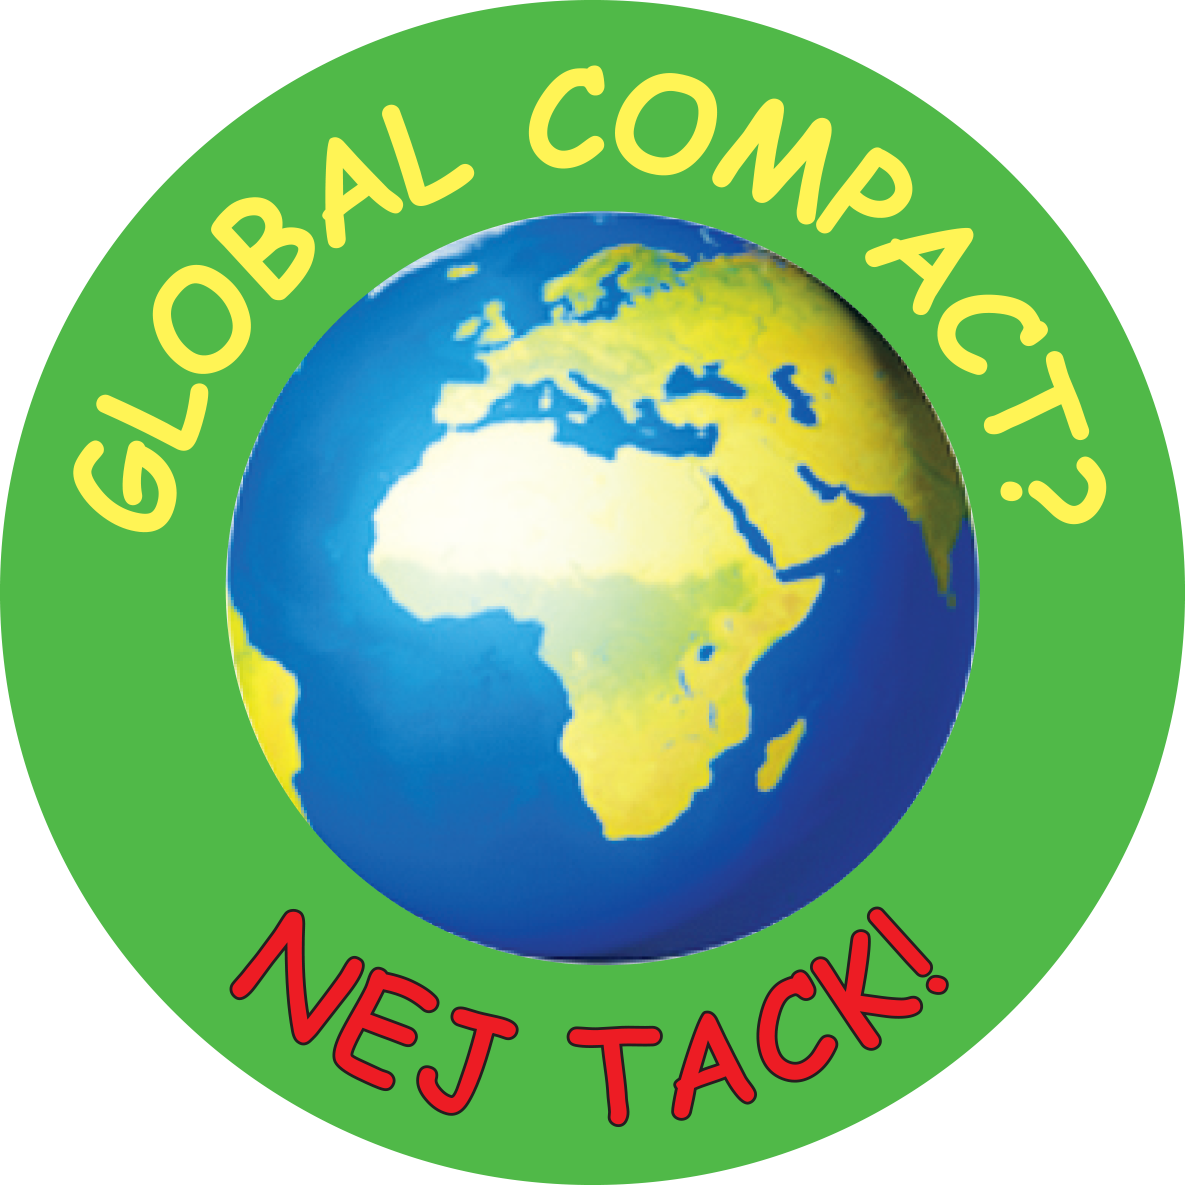 Global Compact - Nej tack.png